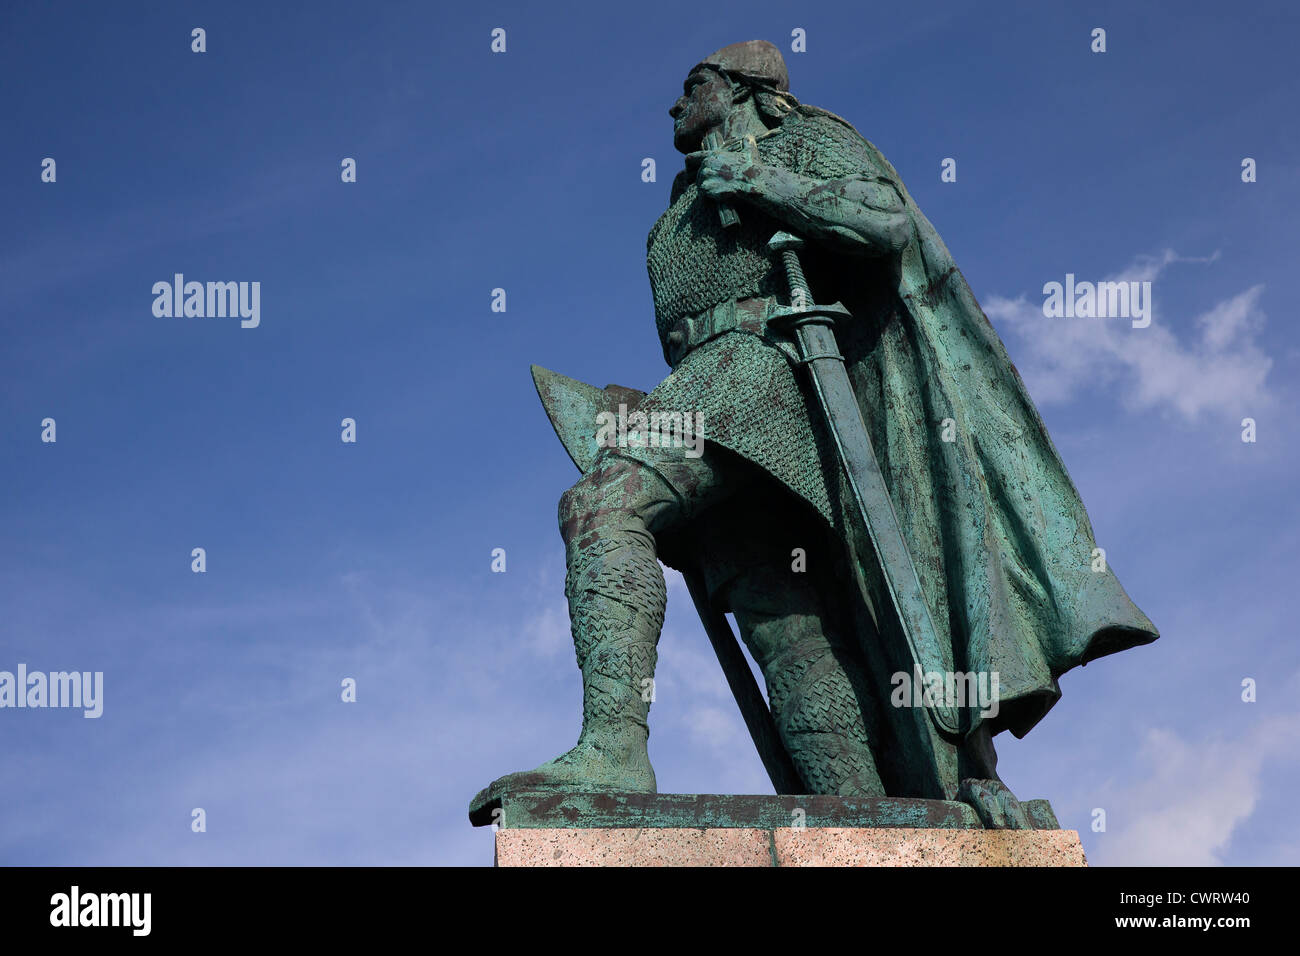 Statue of the viking explorer, Leif Eriksson, outside Hallgrimskirkja Church, Reykjavik, Iceland Stock Photo